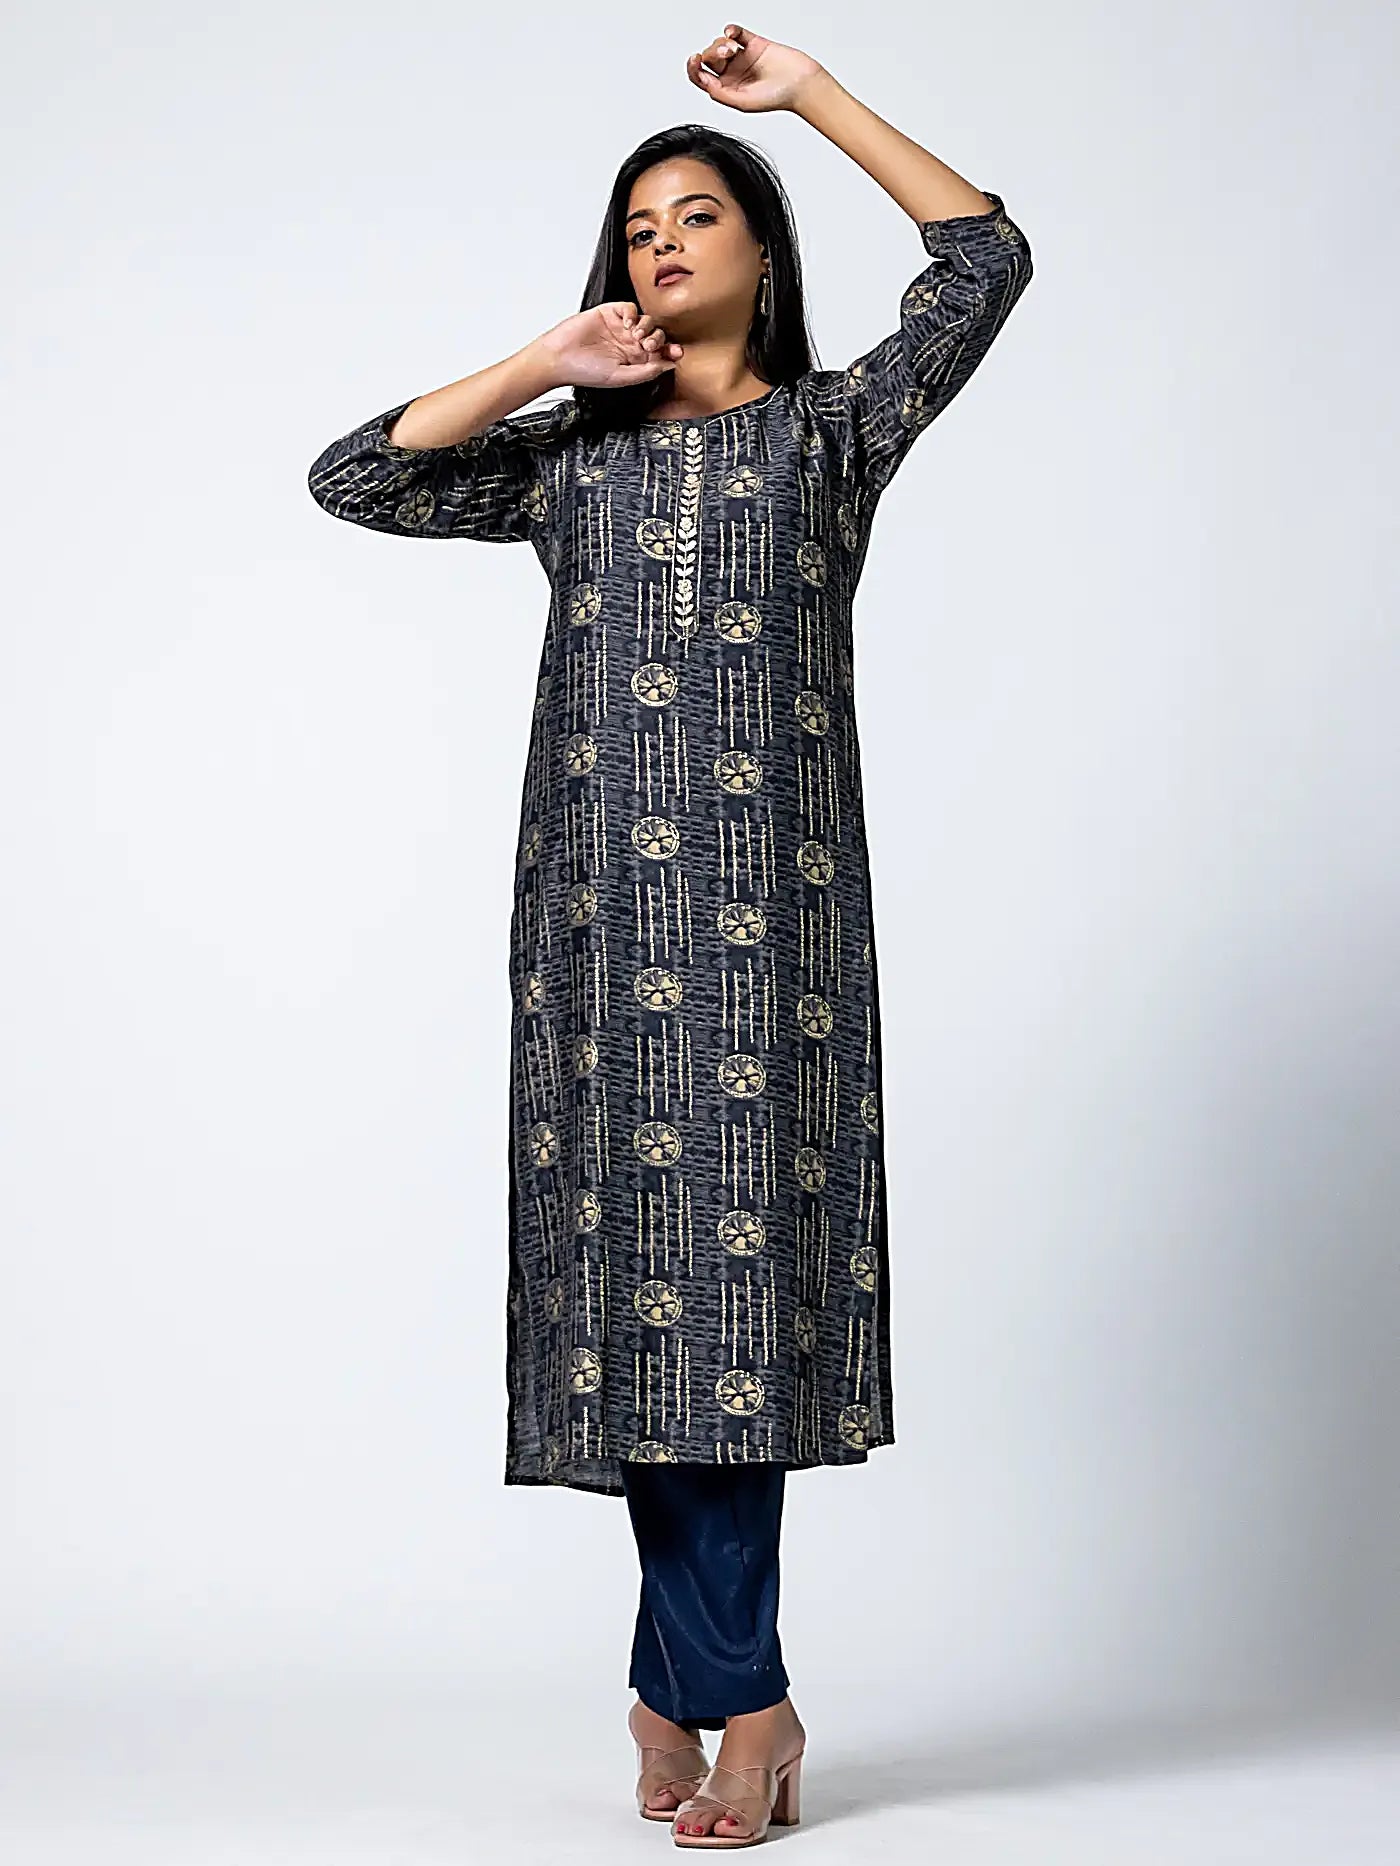 Buy latest salwar kameez | Latest salwar kameez | Indian fashion dresses,  Pakistani fashion party wear, Kurta designs